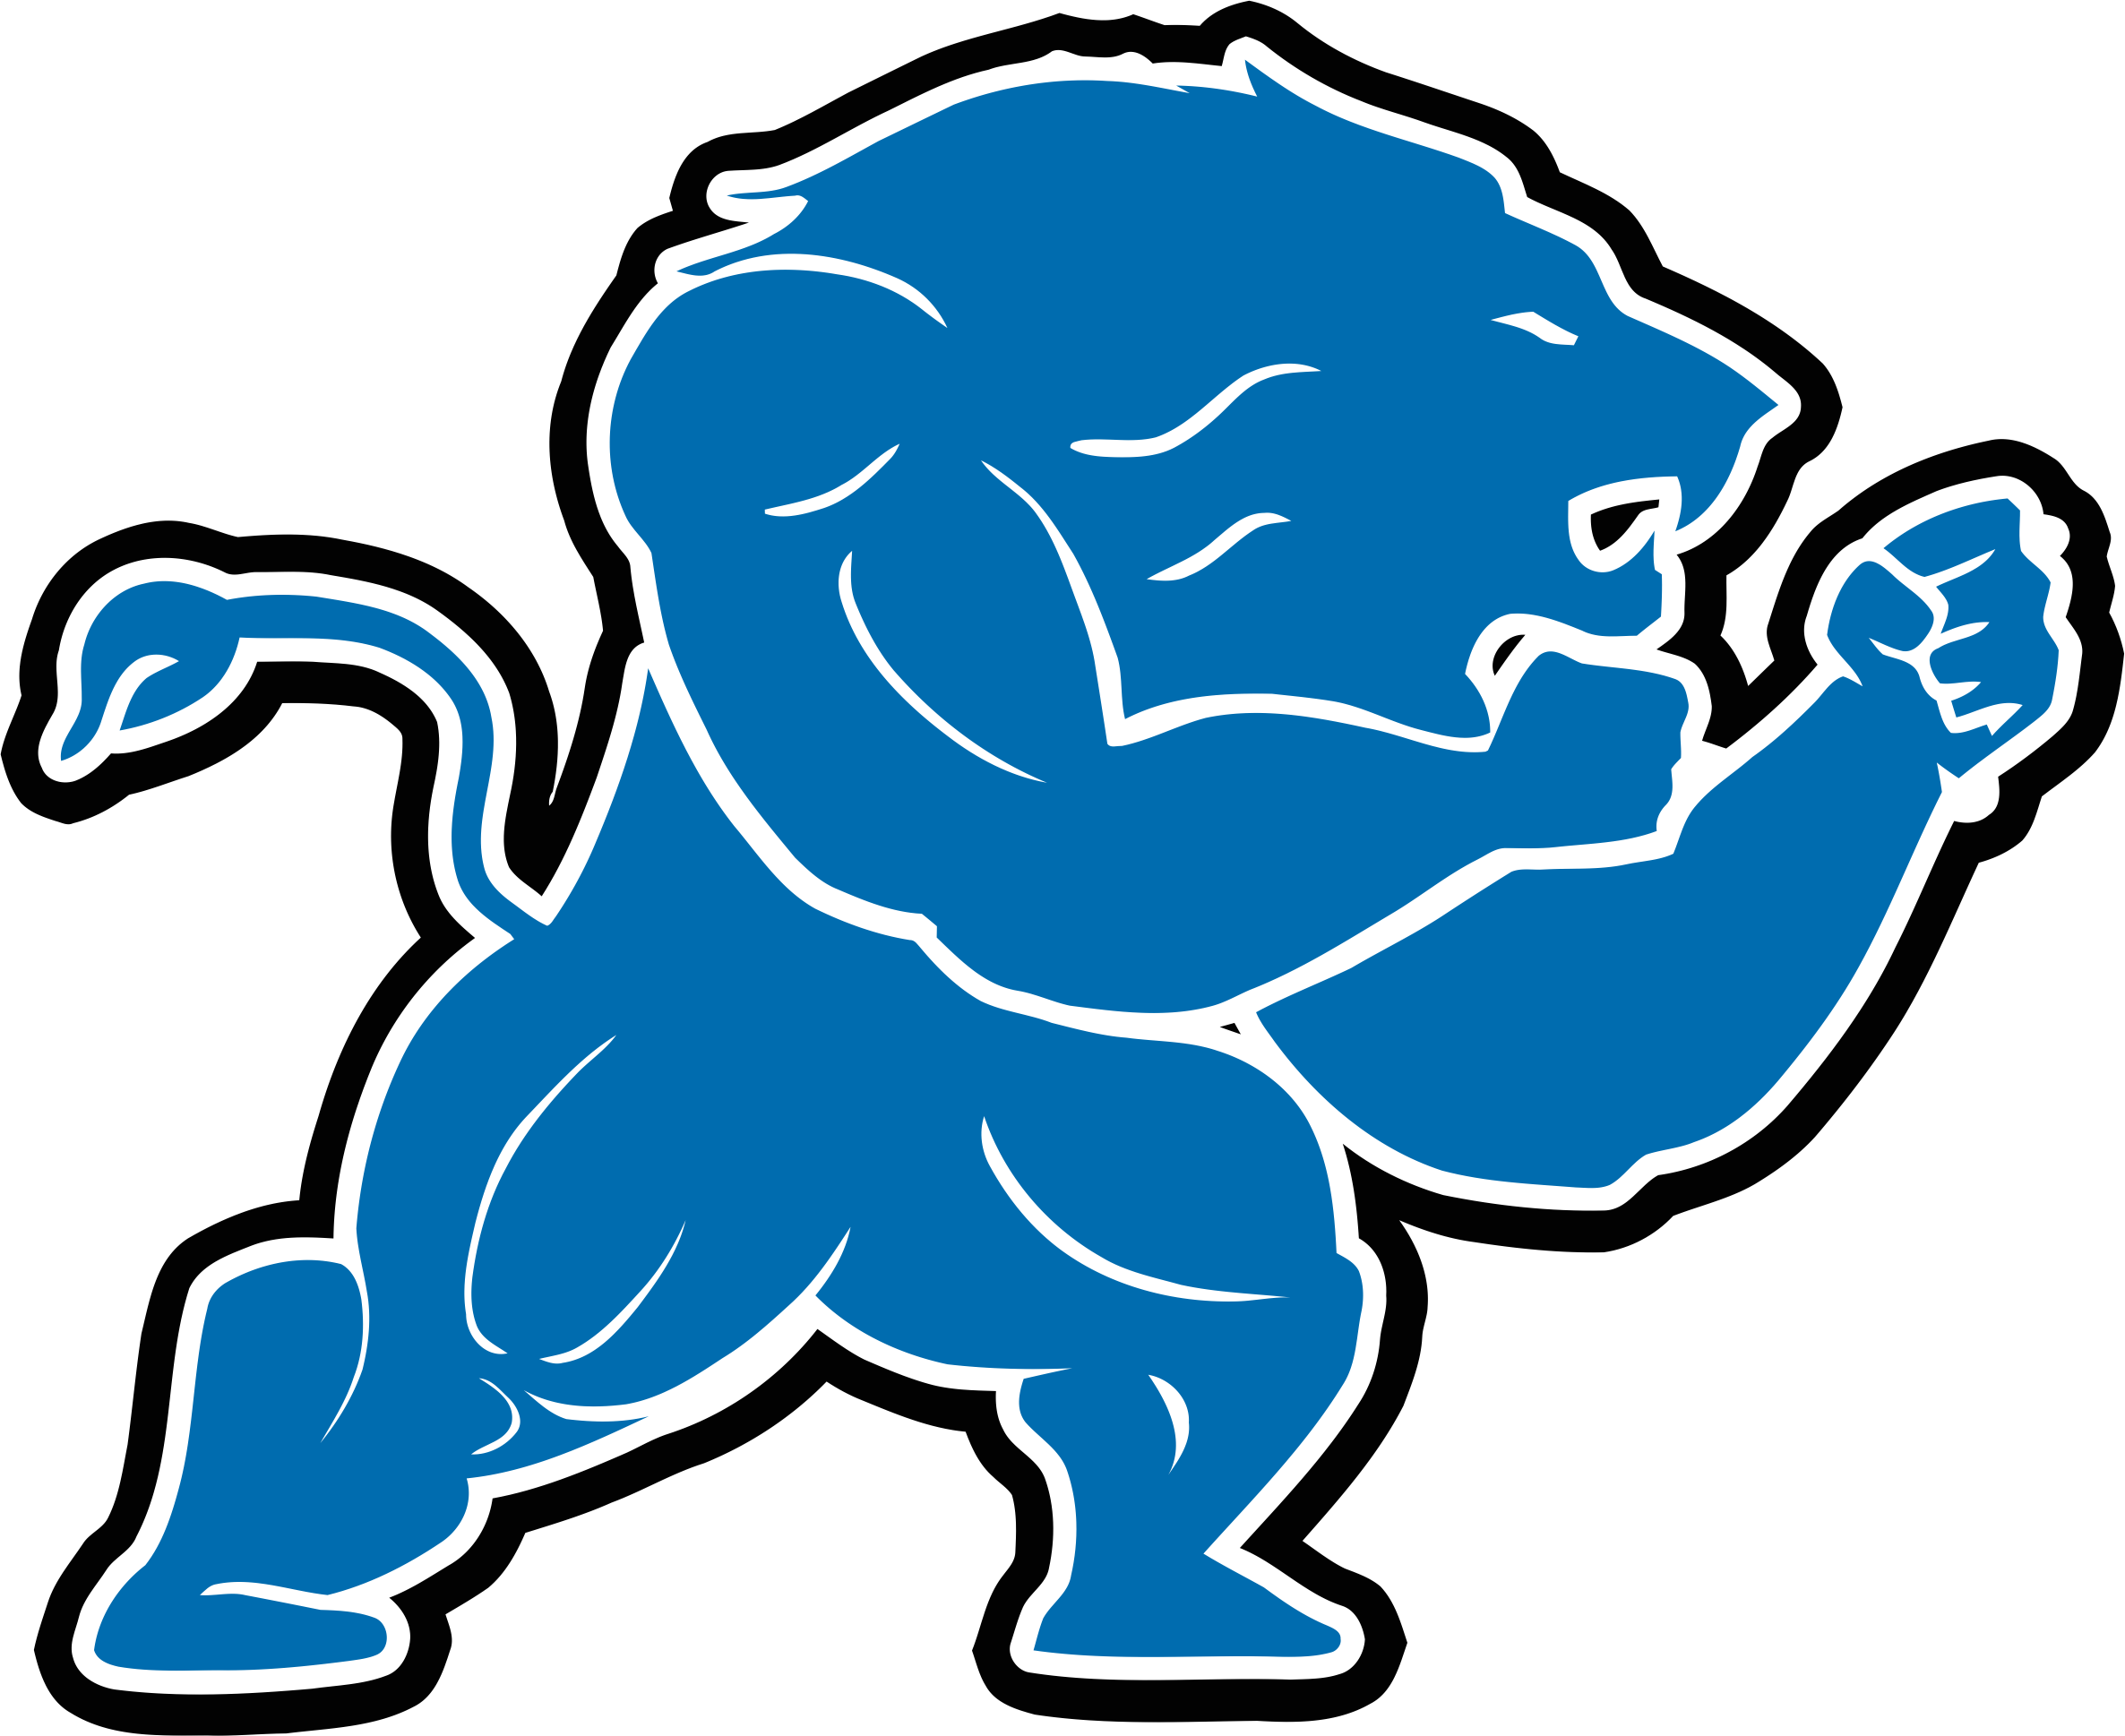 Detroit Lions Steroids Logo fabric transfer